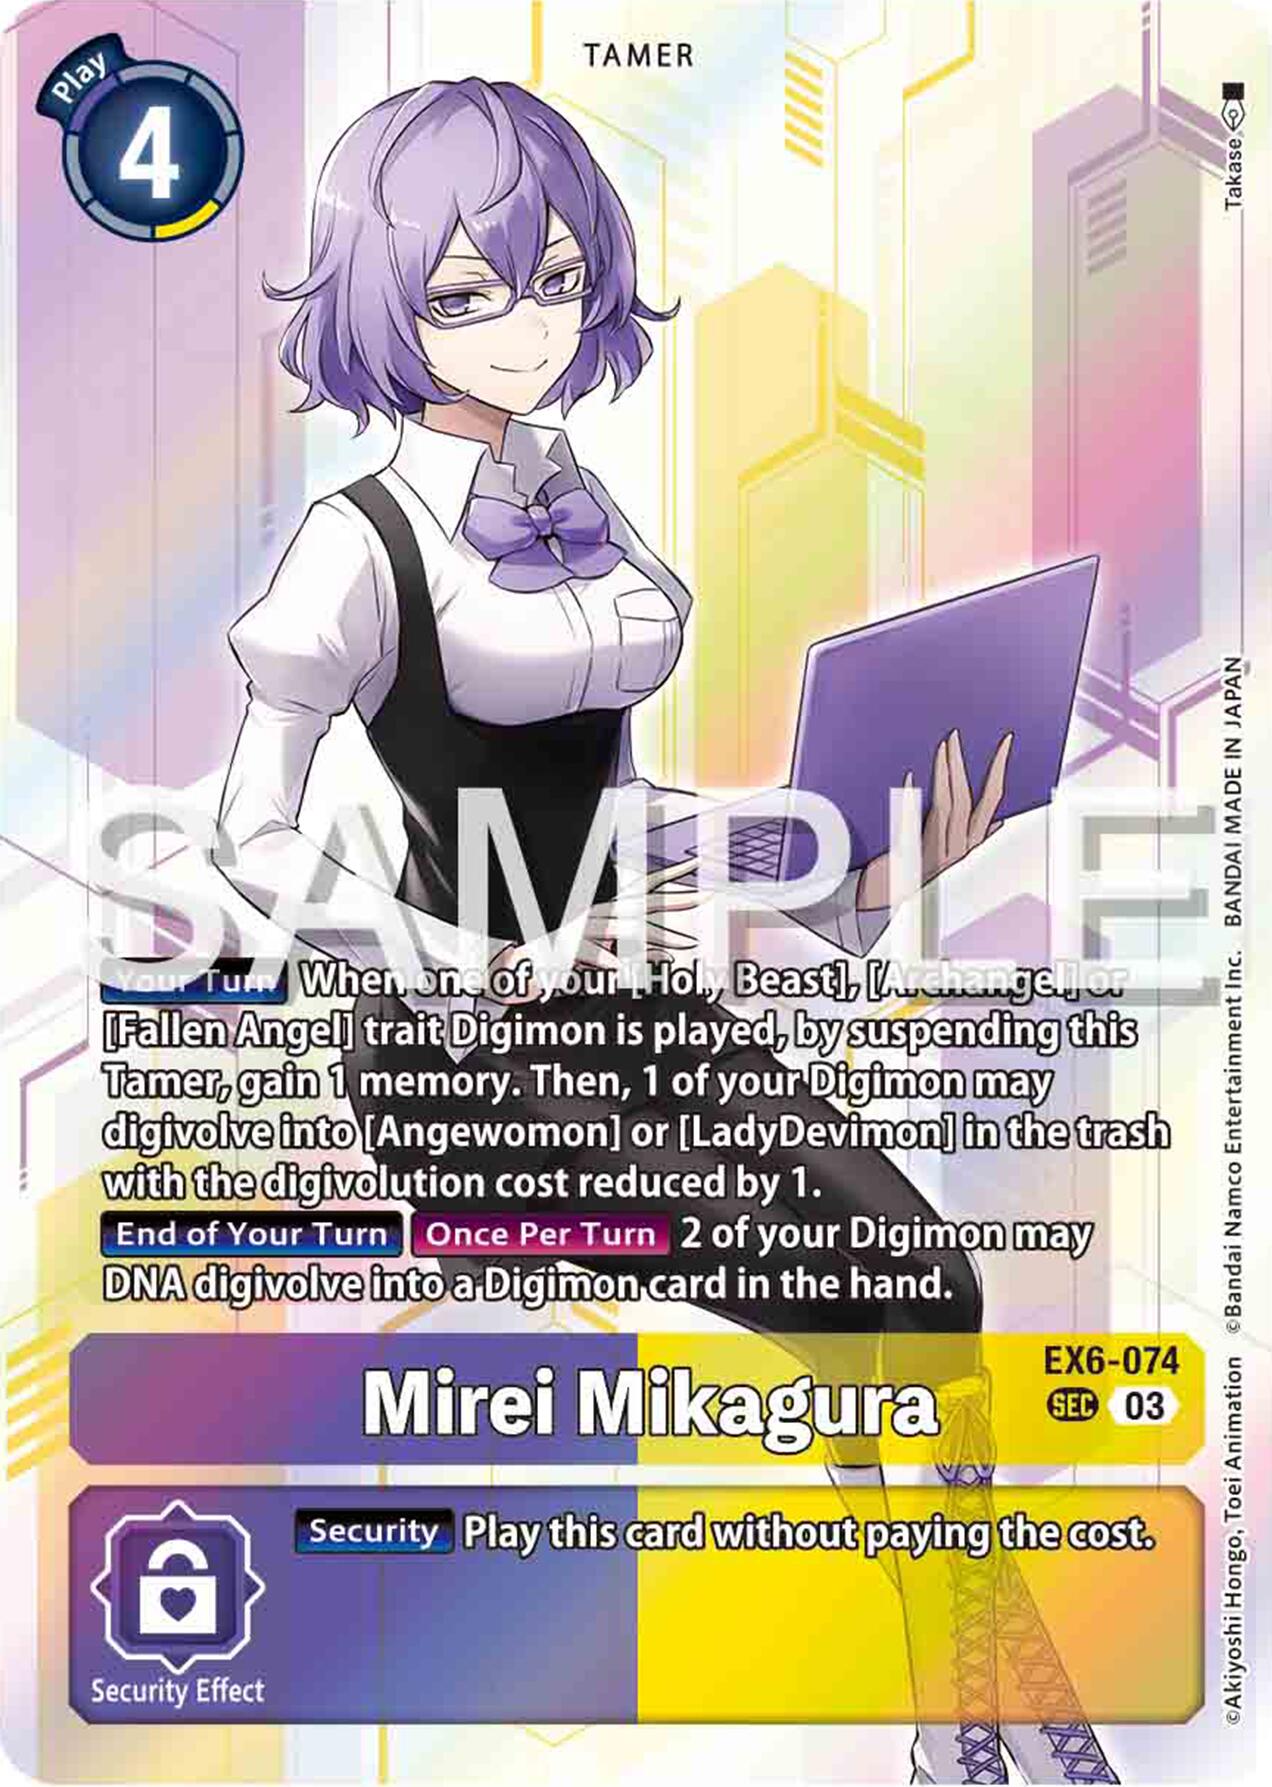 Mirei Mikagura [EX6-074] [Infernal Ascension] | Event Horizon Hobbies CA